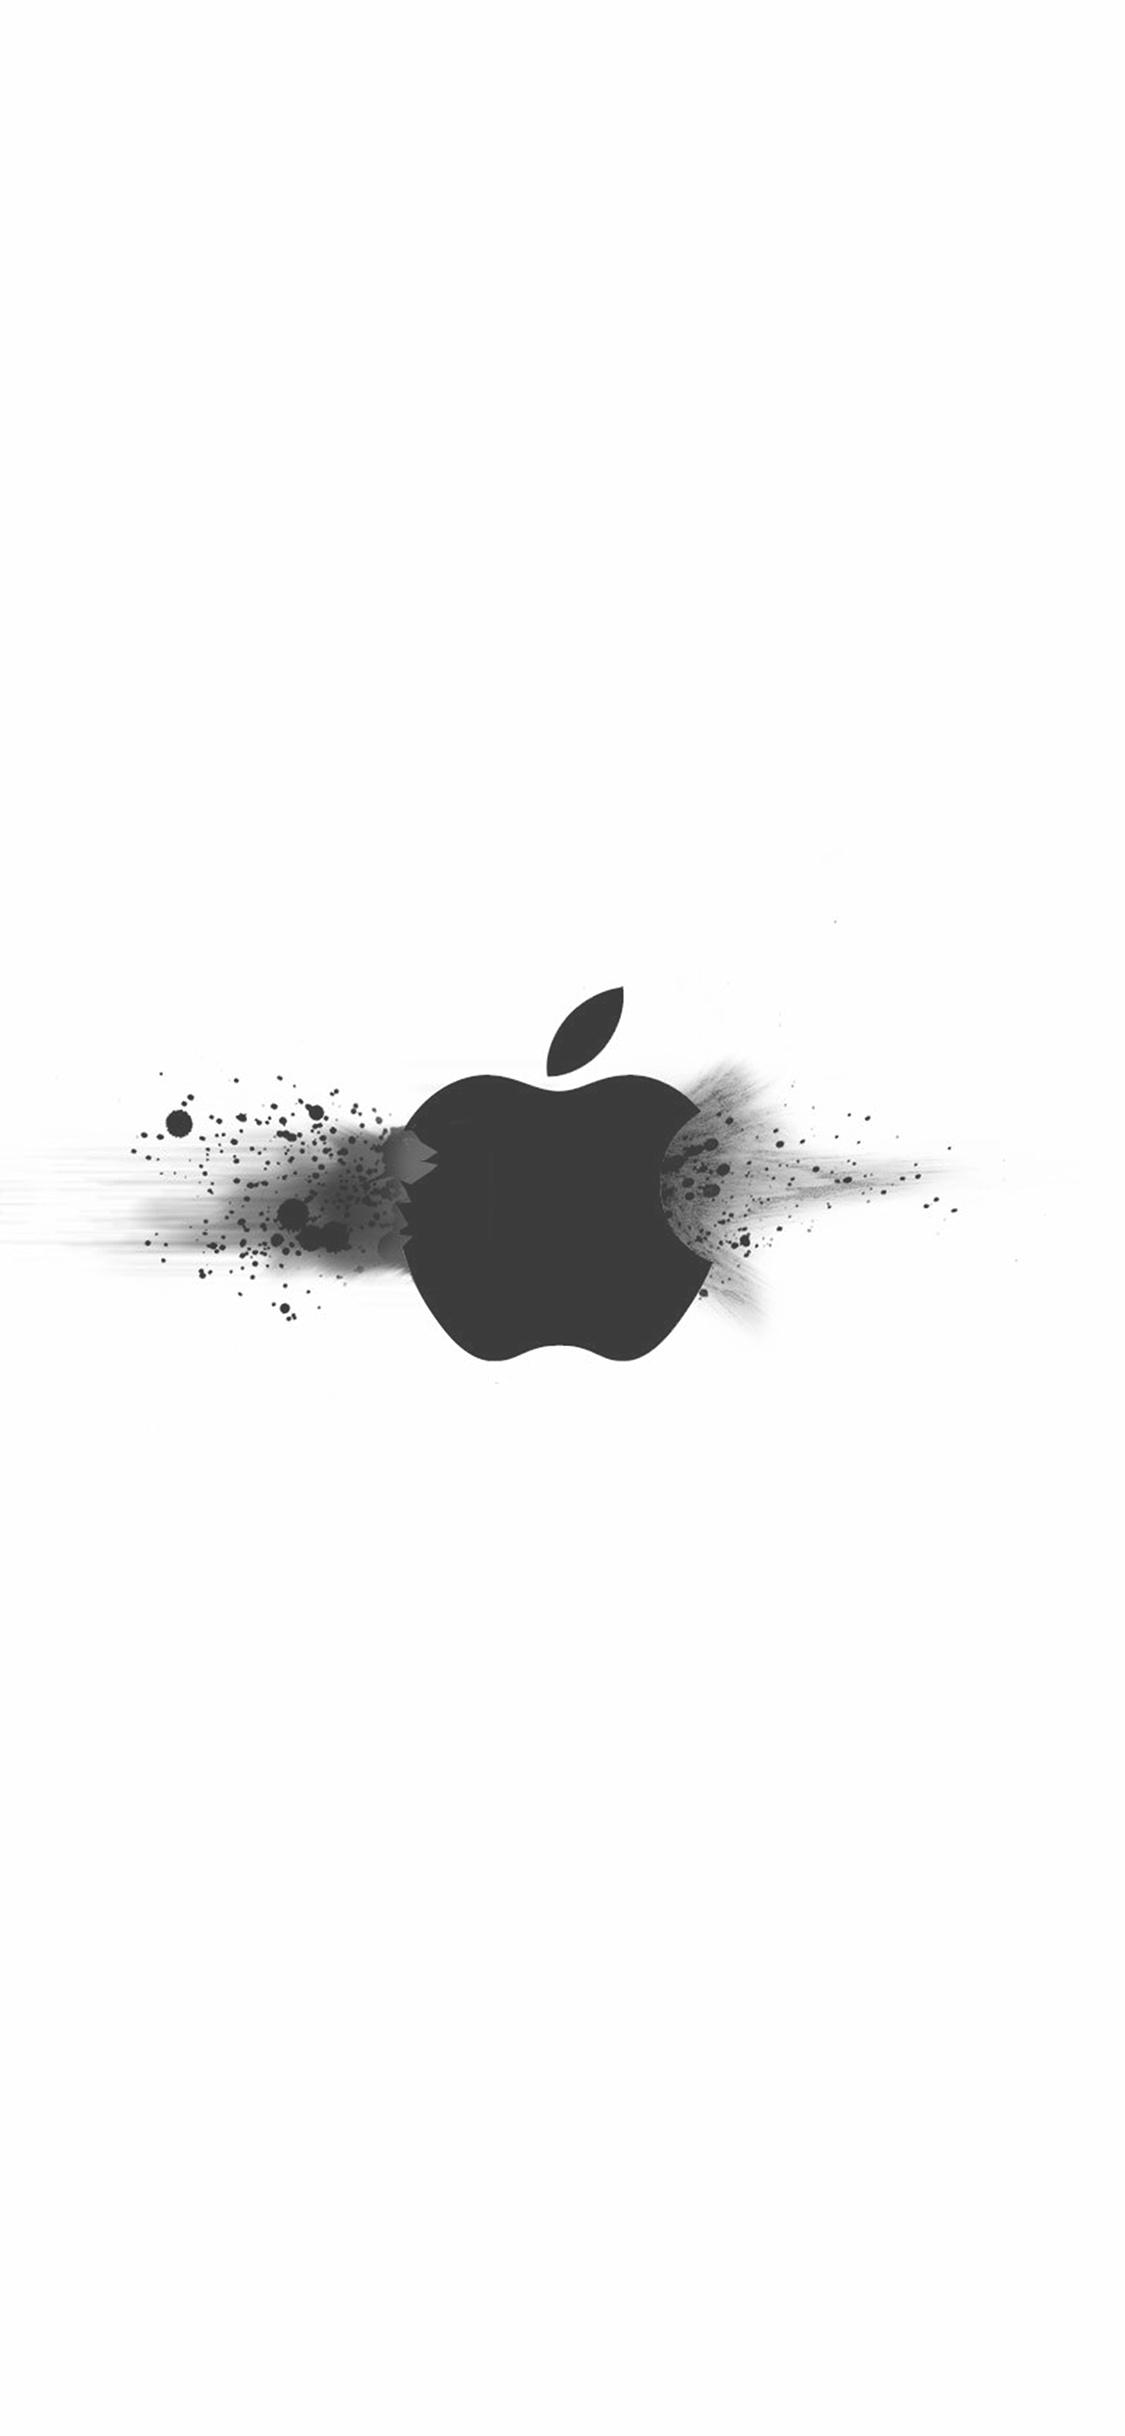 iPhone X wallpaper. apple logo